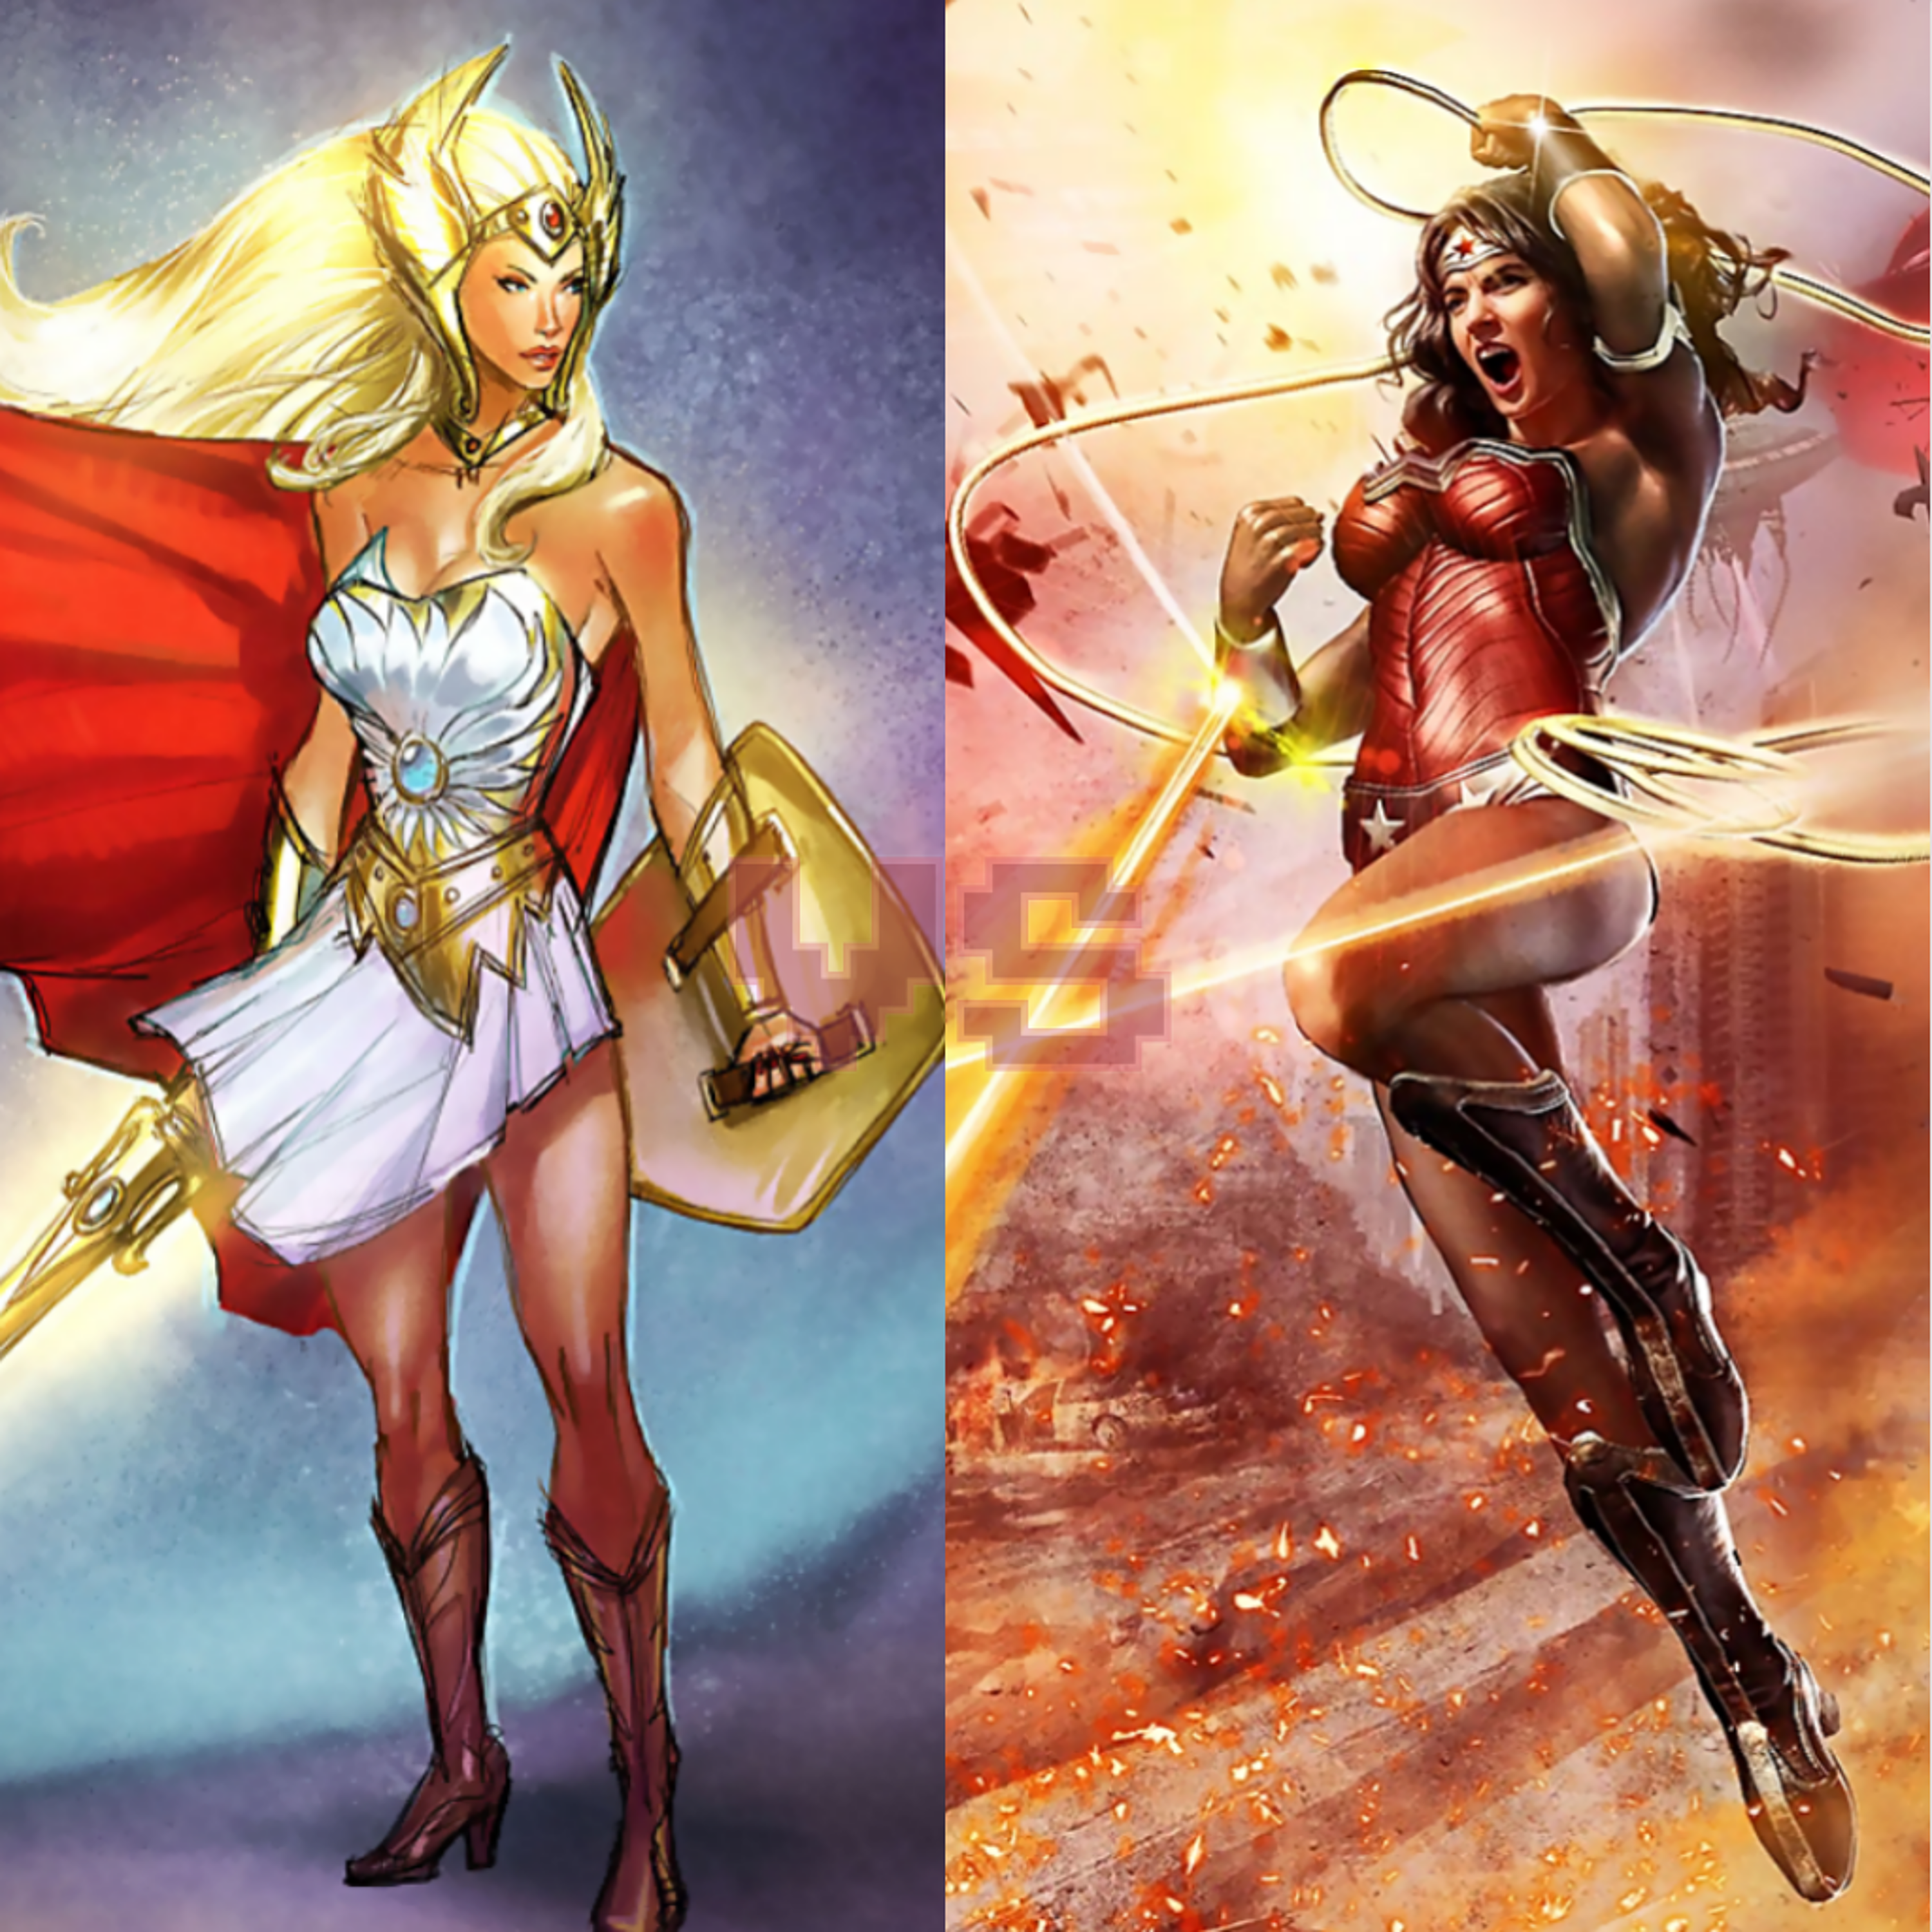 DEATH BATTLE She-Ra versus Wonder Woman by ItemShoplifter. 